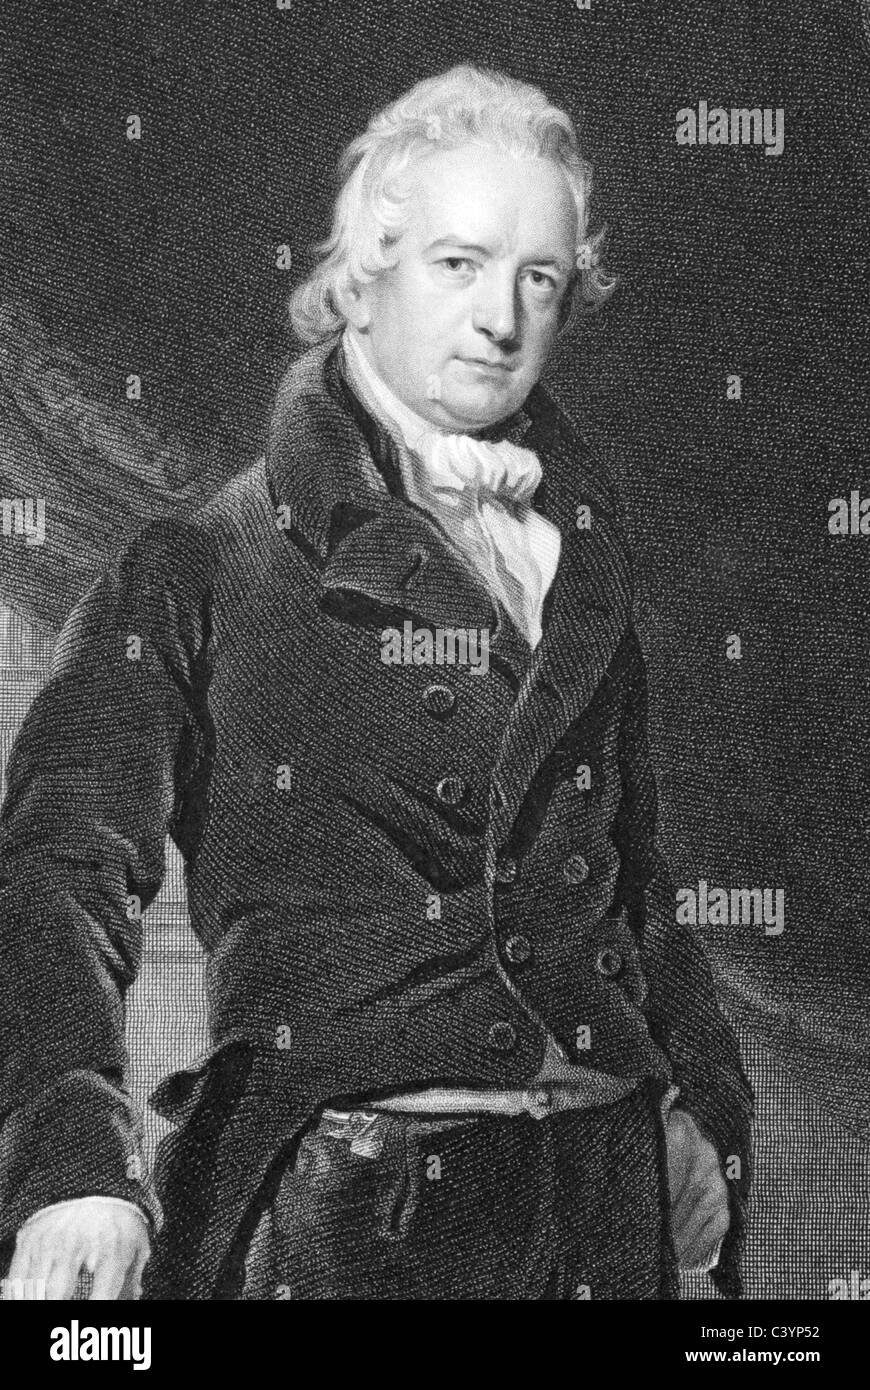 John Abernethy (1764-1831) on engraving from 1832. English surgeon, grandson of the Reverend John Abernethy. Stock Photo